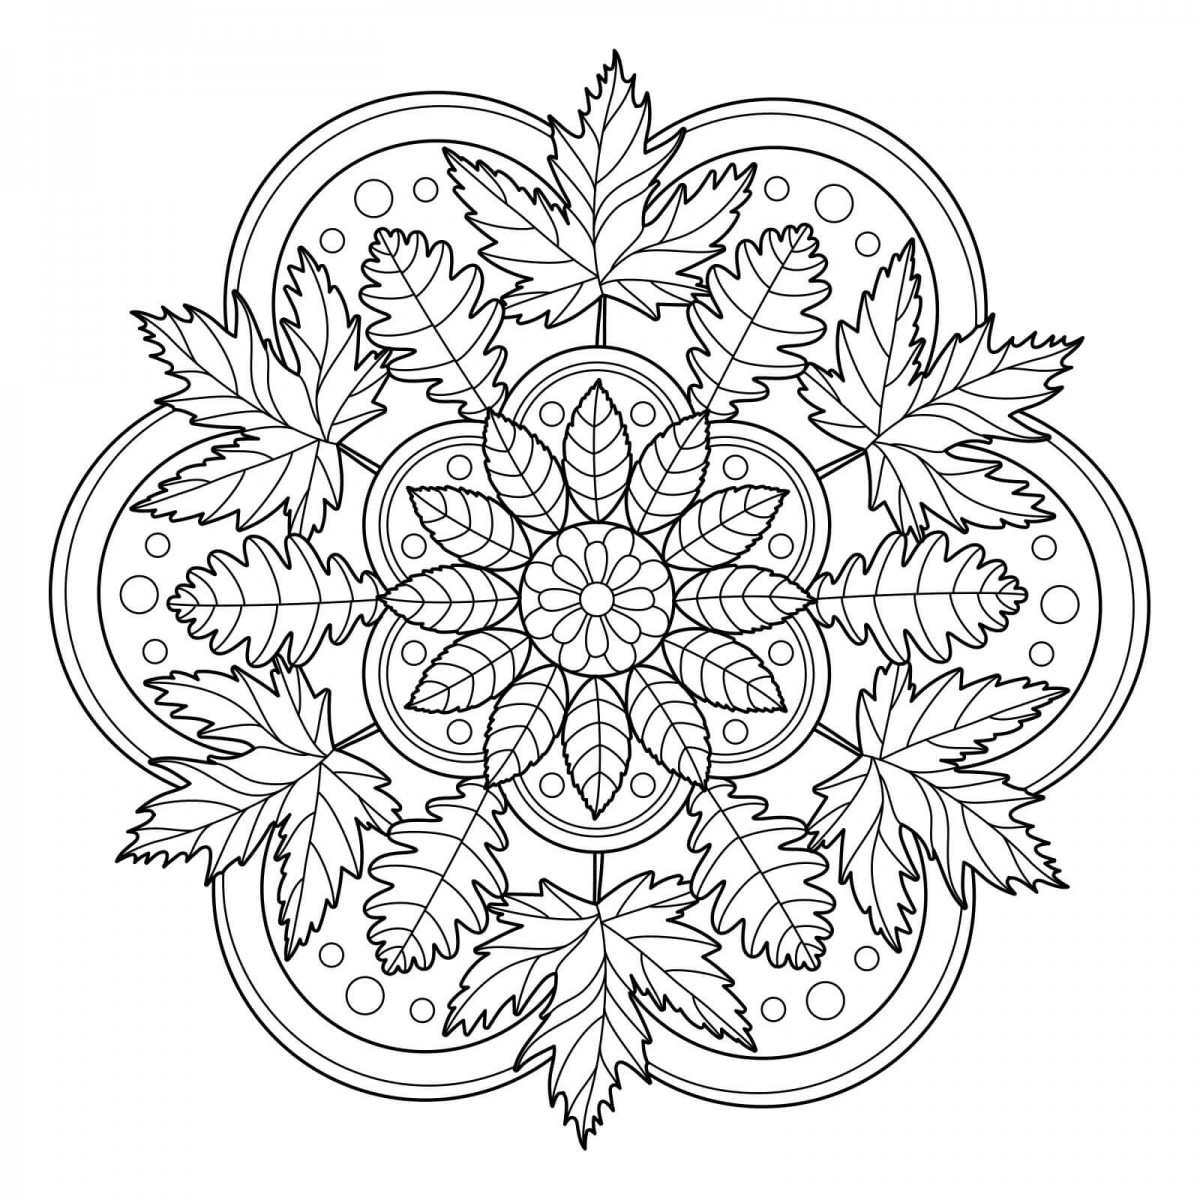 43. Leaf Mandala Coloring Page